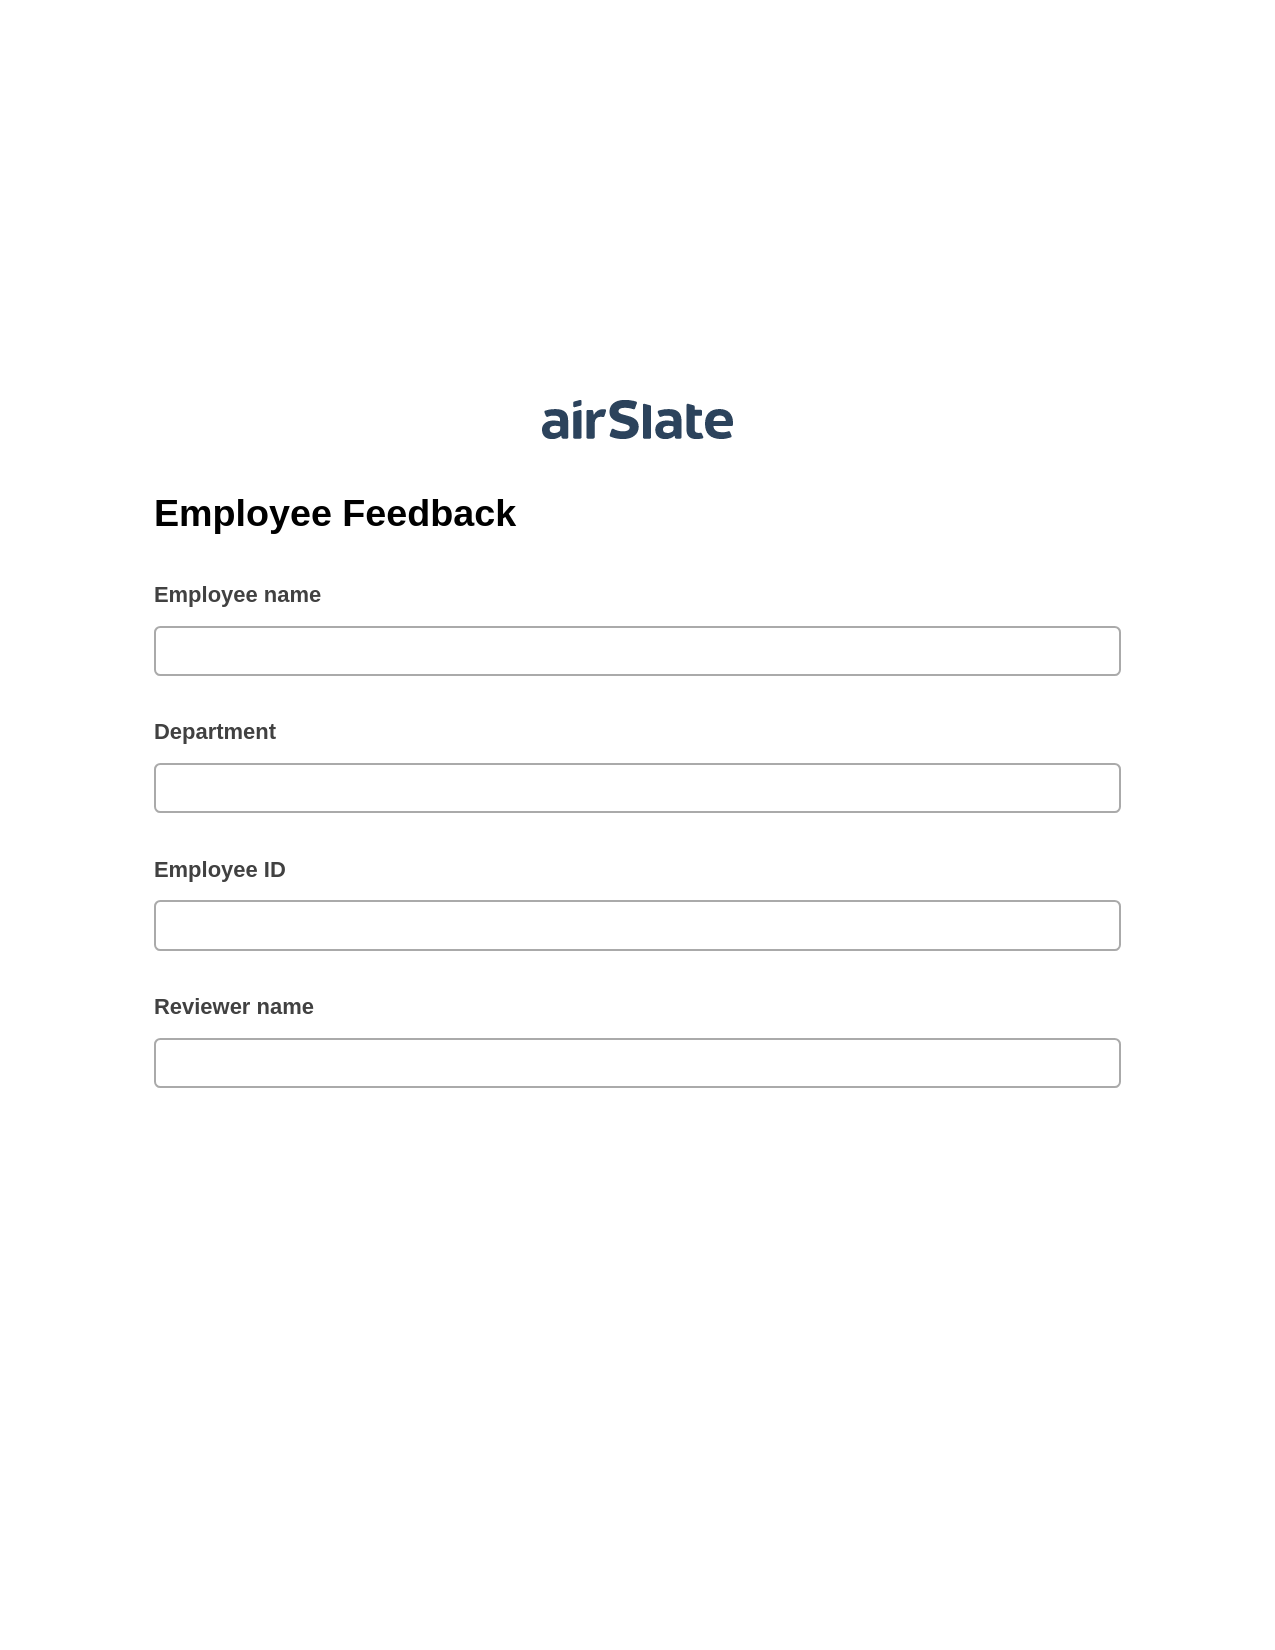 Multirole Employee Feedback Pre-fill from Google Sheet Dropdown Options Bot, Send a Slate to Salesforce Contact Bot, OneDrive Bot